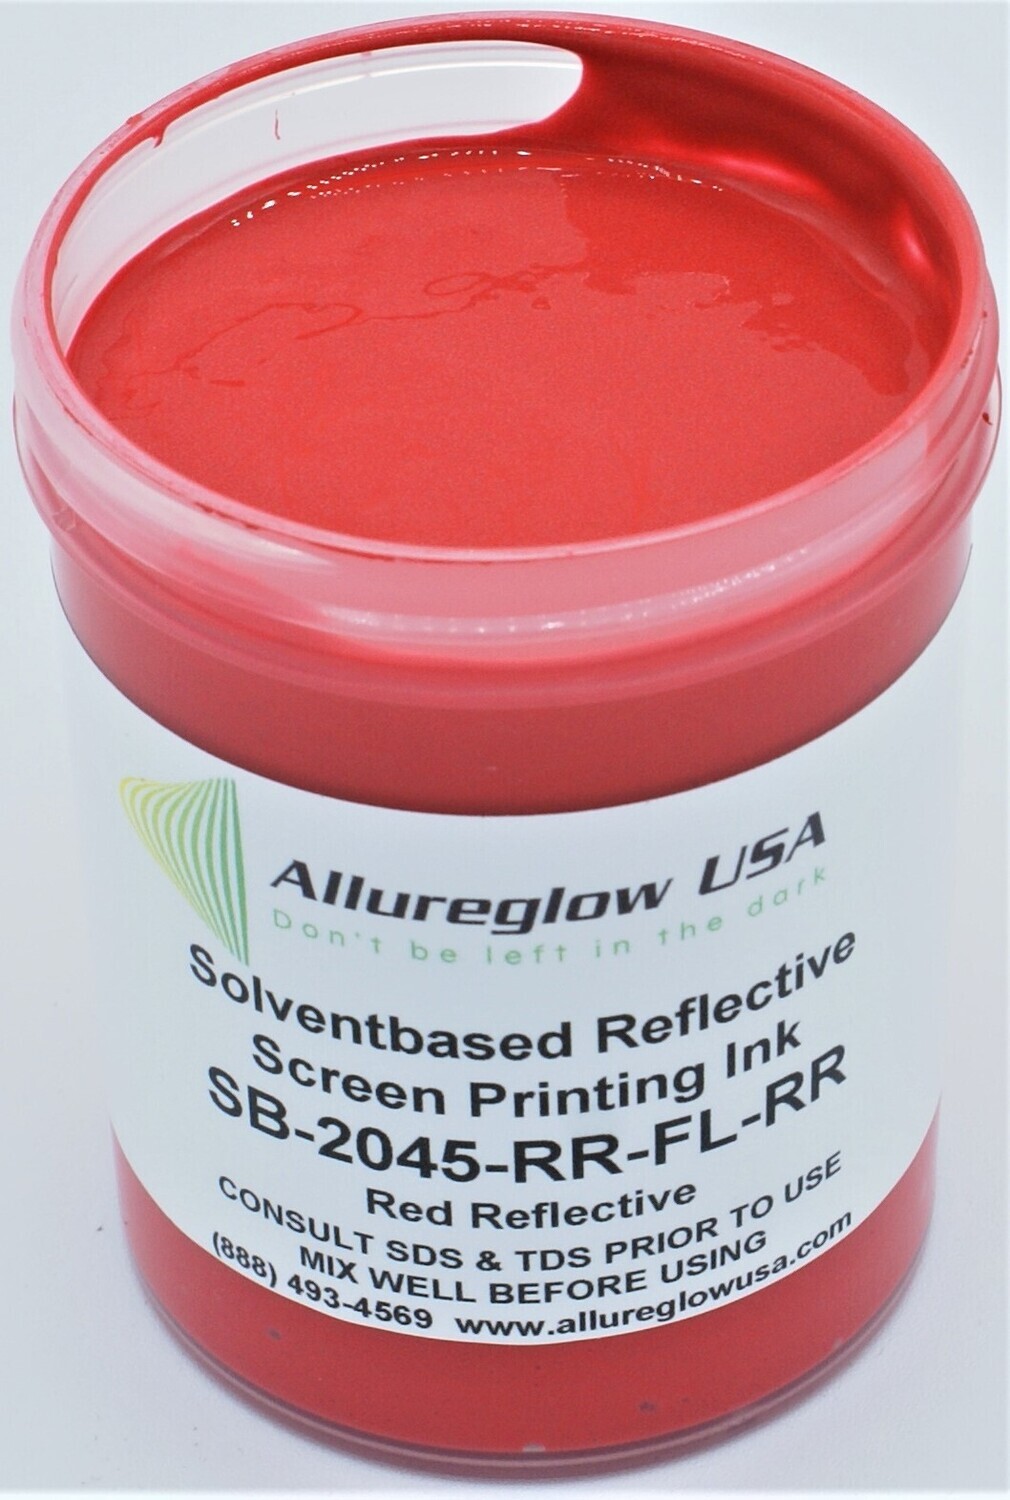 SB-2045-RR-FL-RR-QT SOLVENT BASED RED REFLECTIVE SCREEN PRINTING INK - QUART